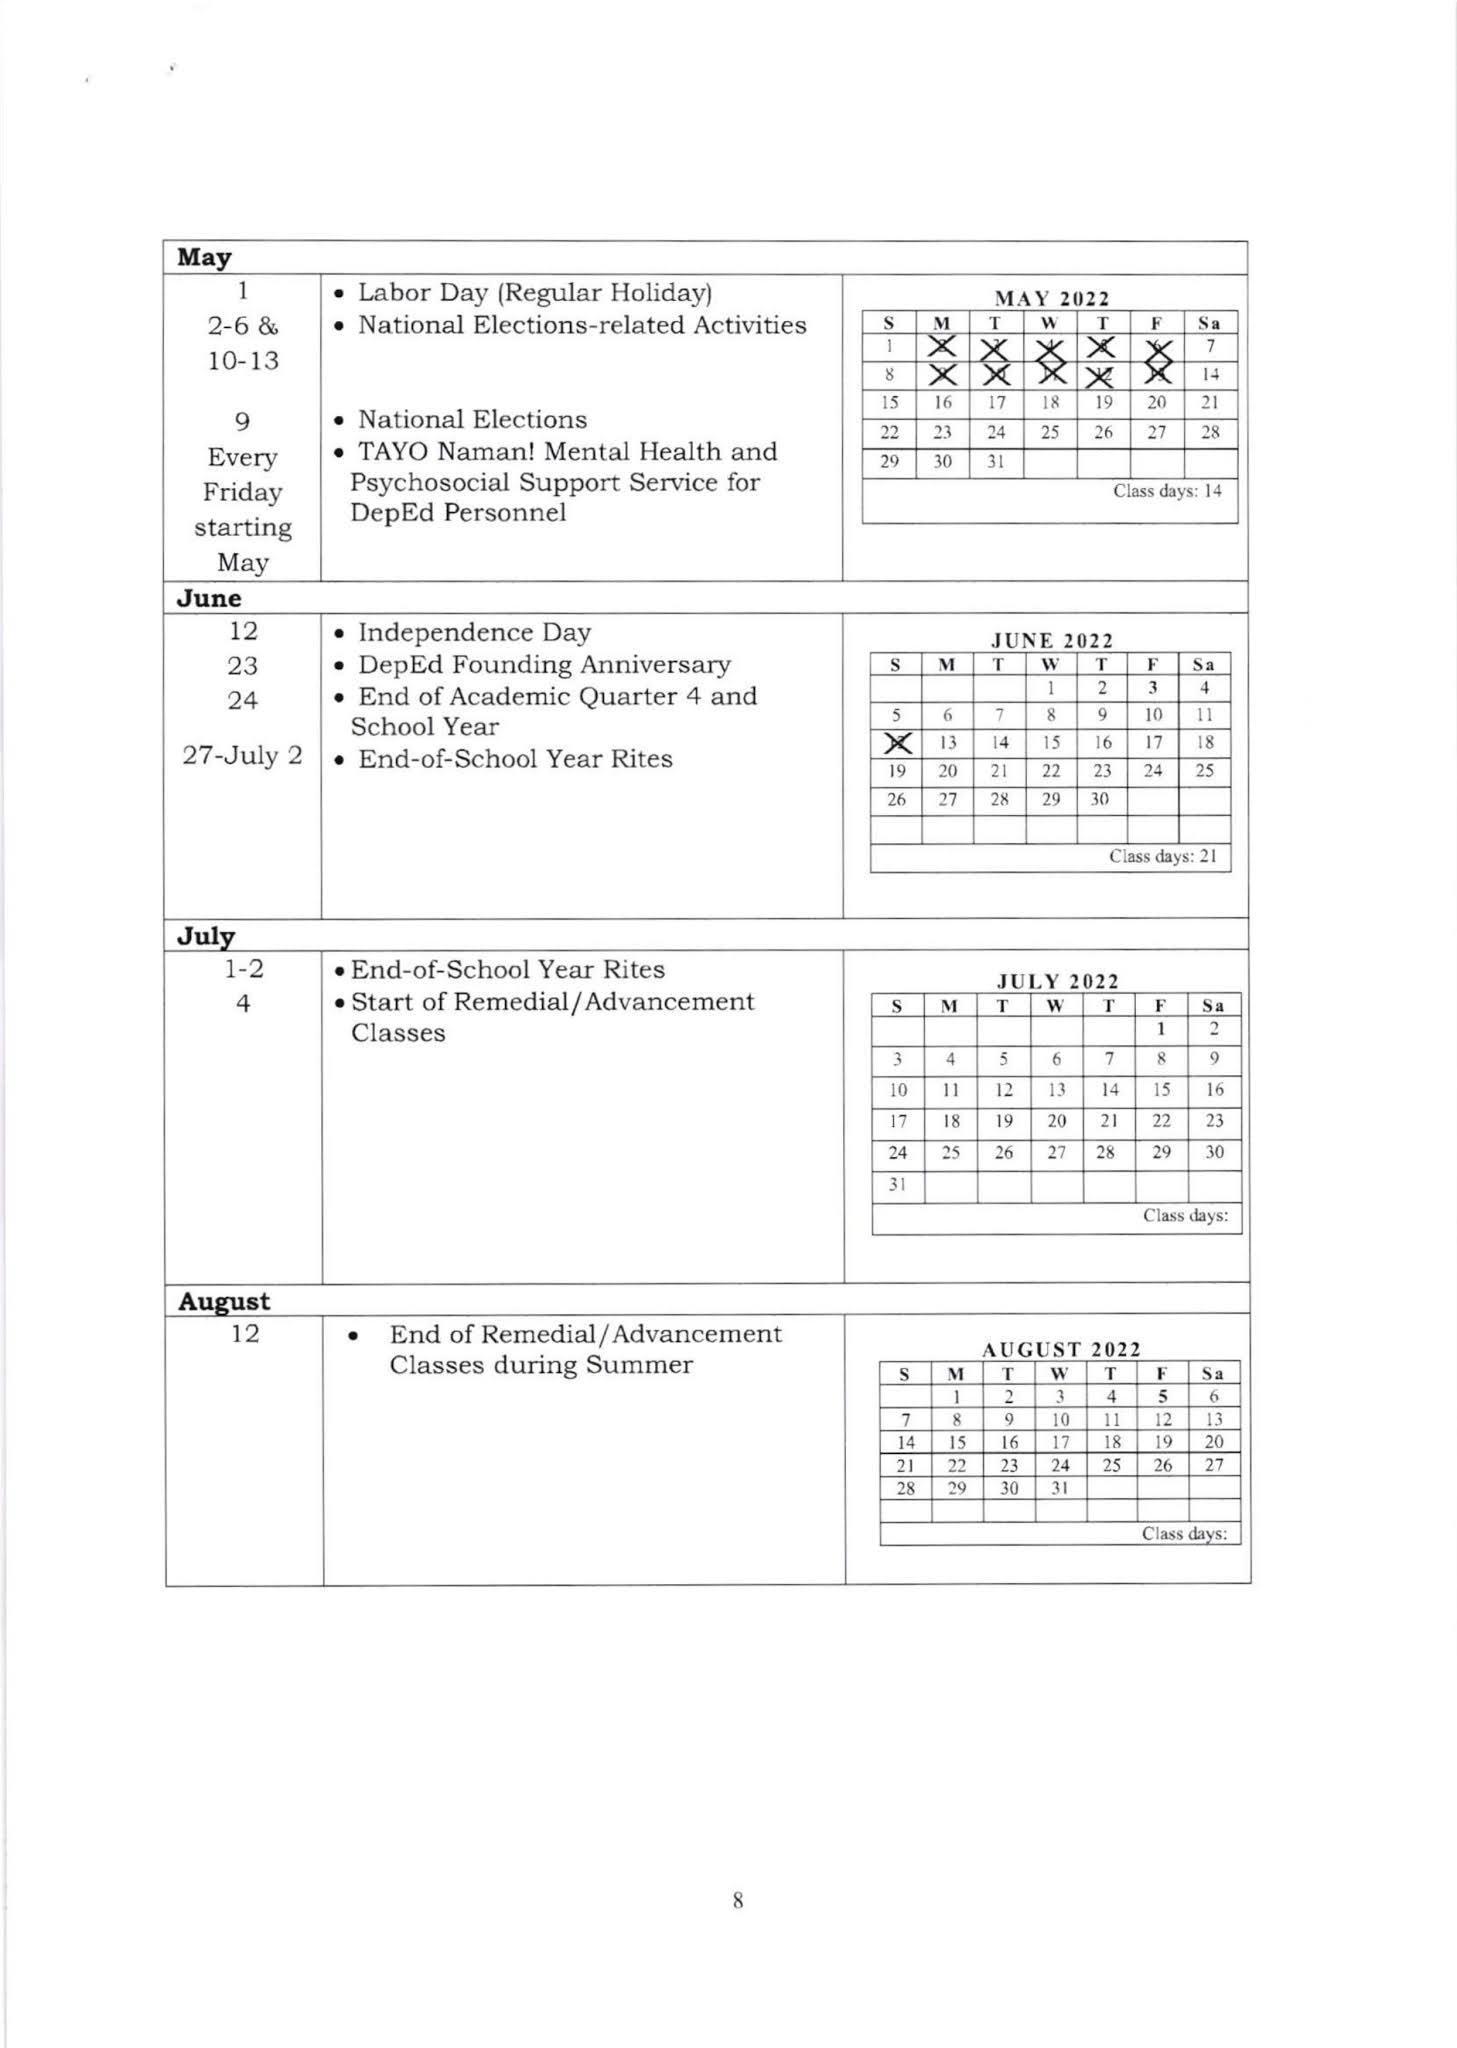 deped-school-calendar-2021